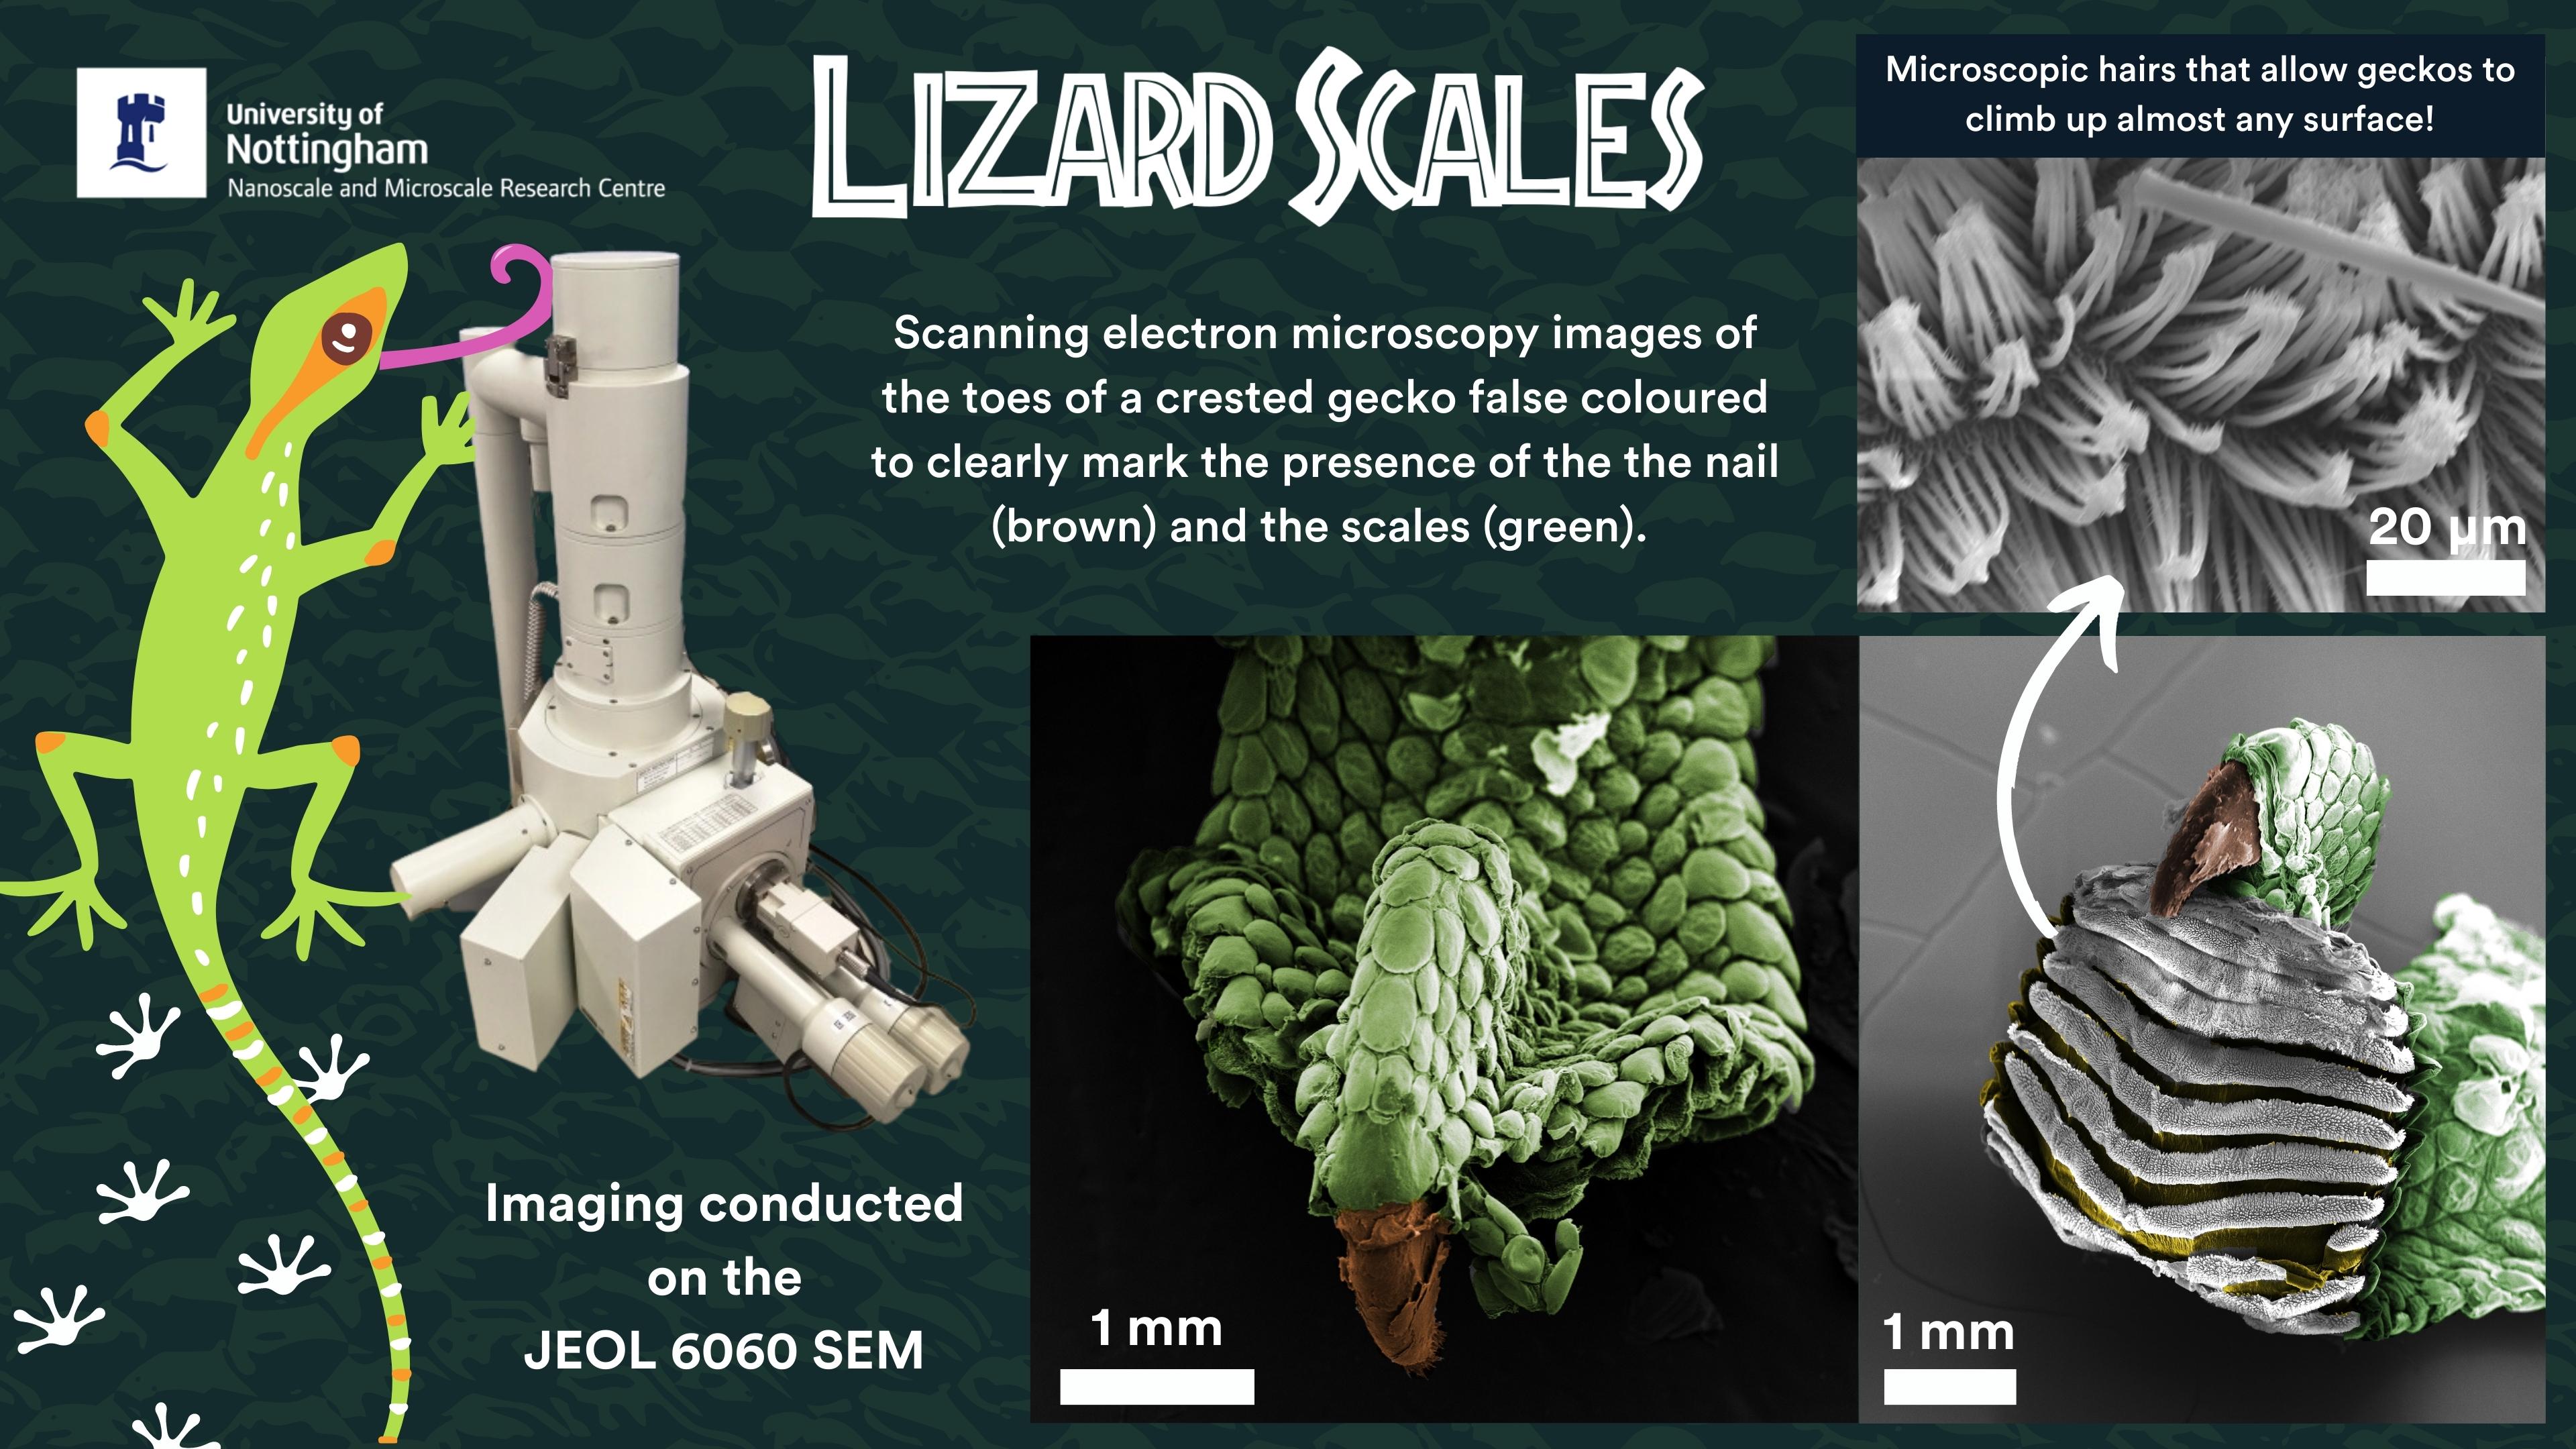 Under the Microscope Lizard Scales